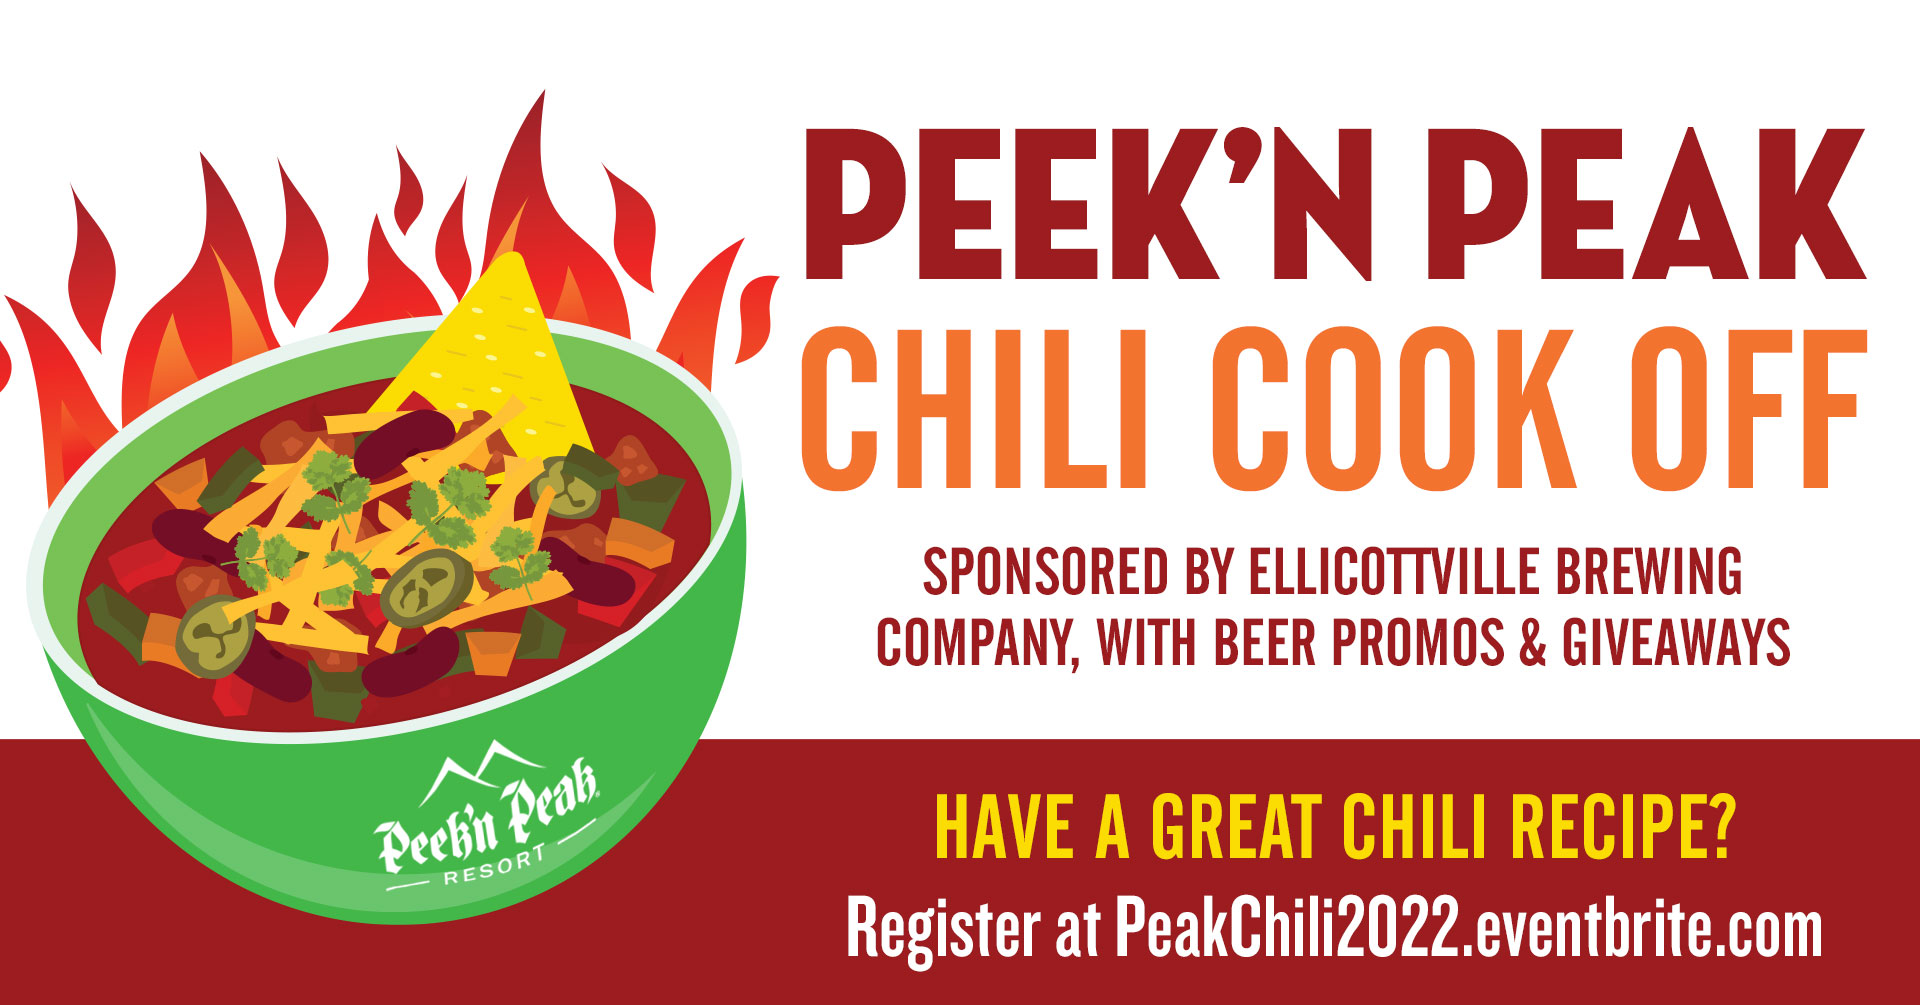 Peek n' Peak Chili Cook-Off